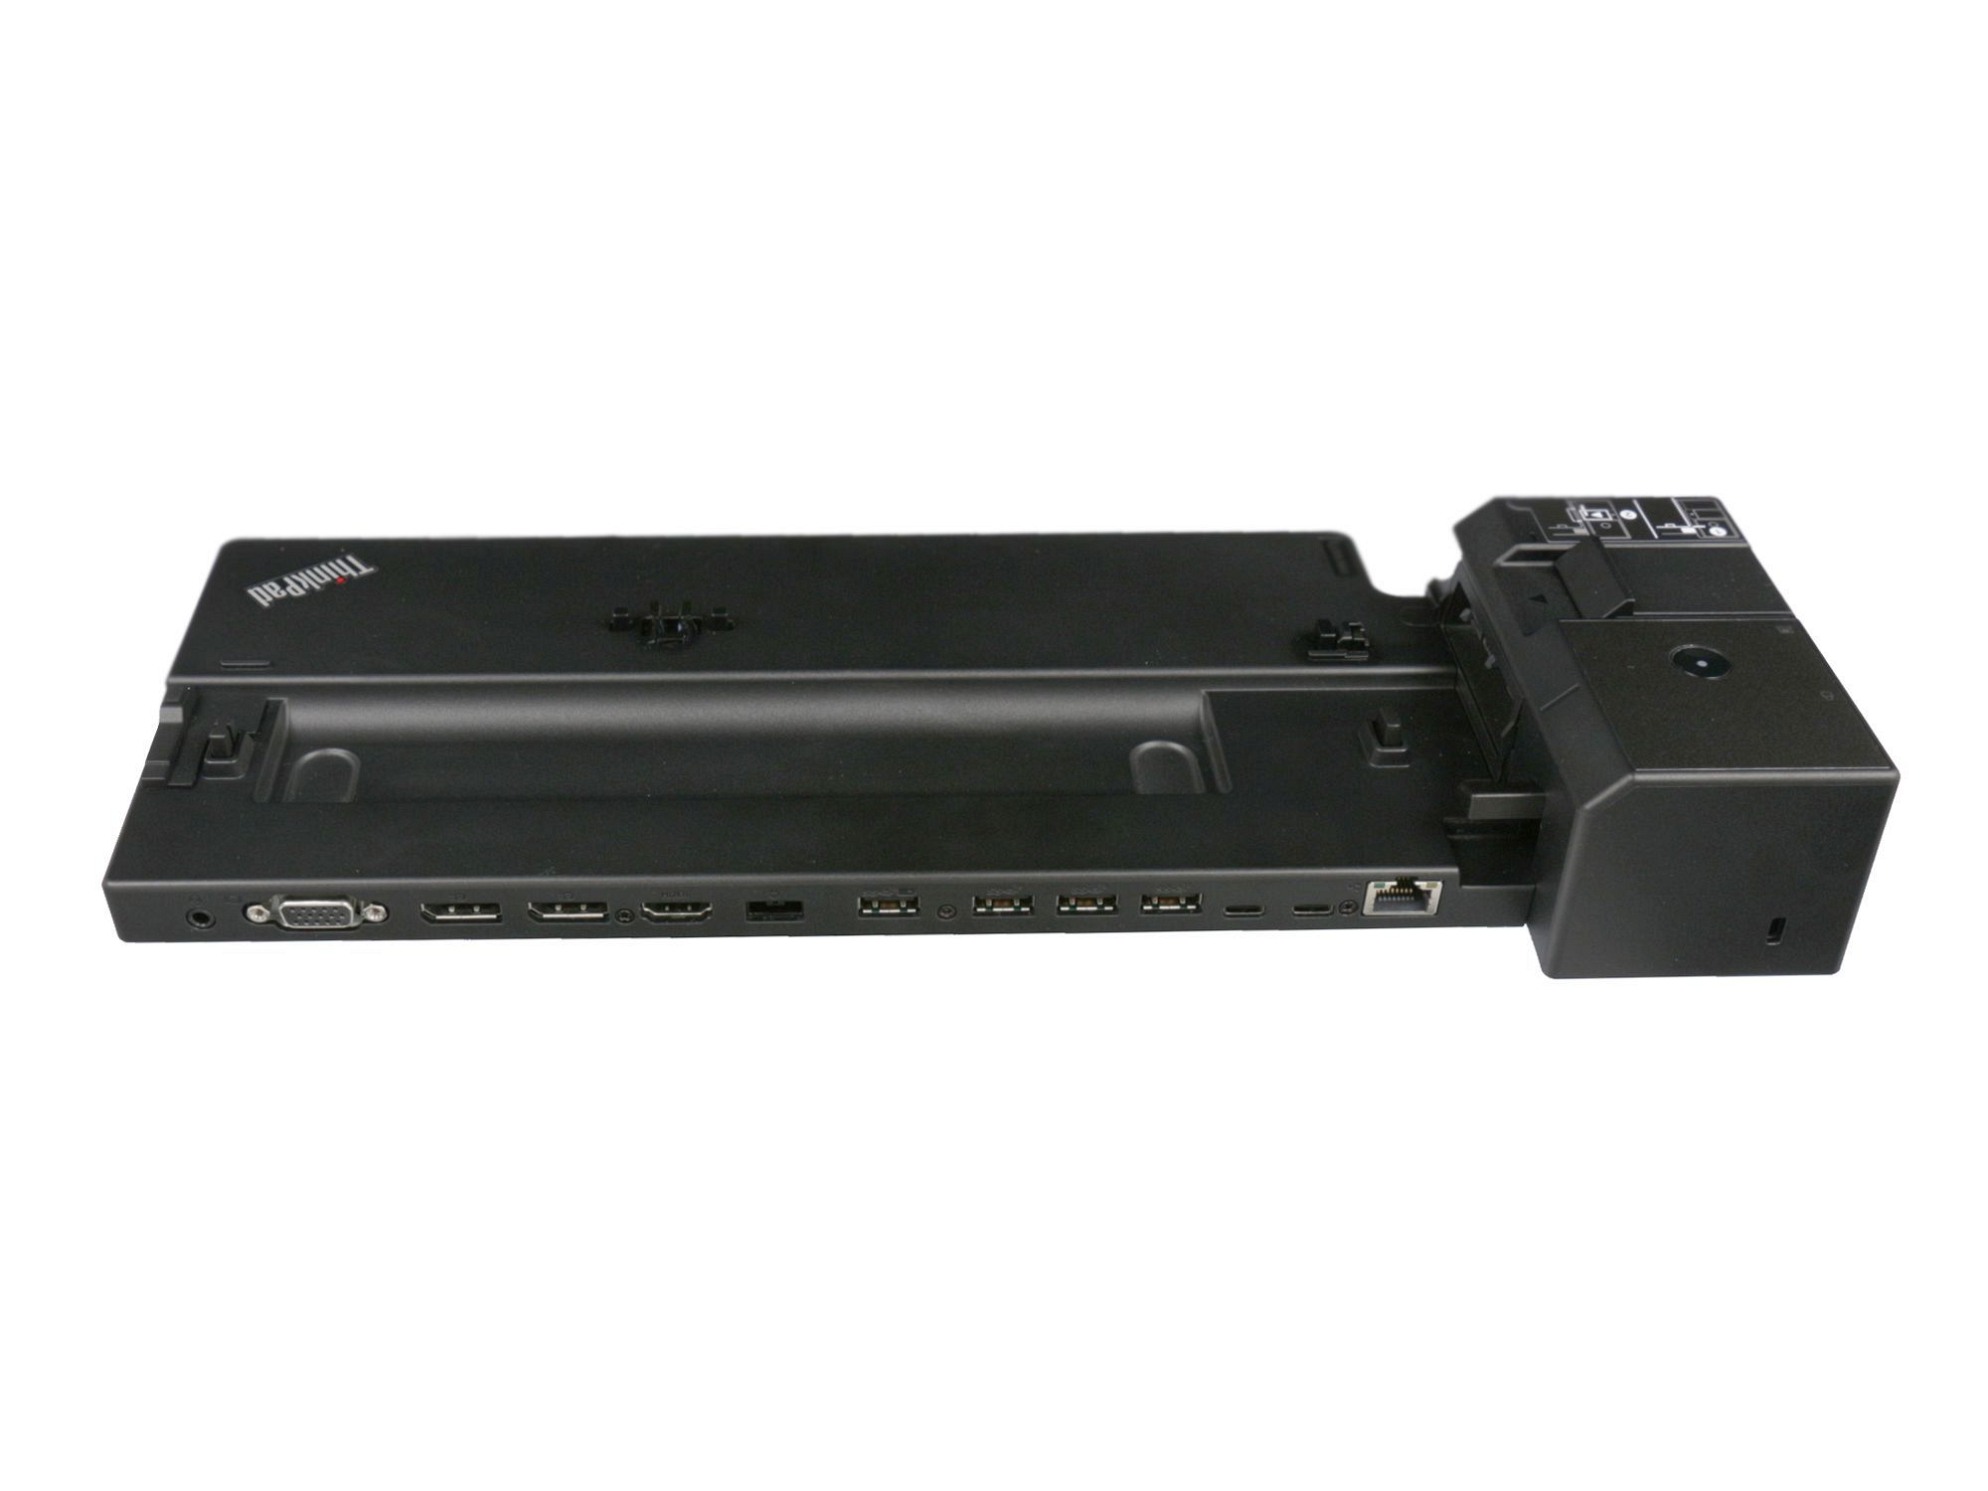 Lenovo ThinkPad L580 (20LW/20LX) Original ThinkPad Ultra Docking Station inkl. 135W Netzteil